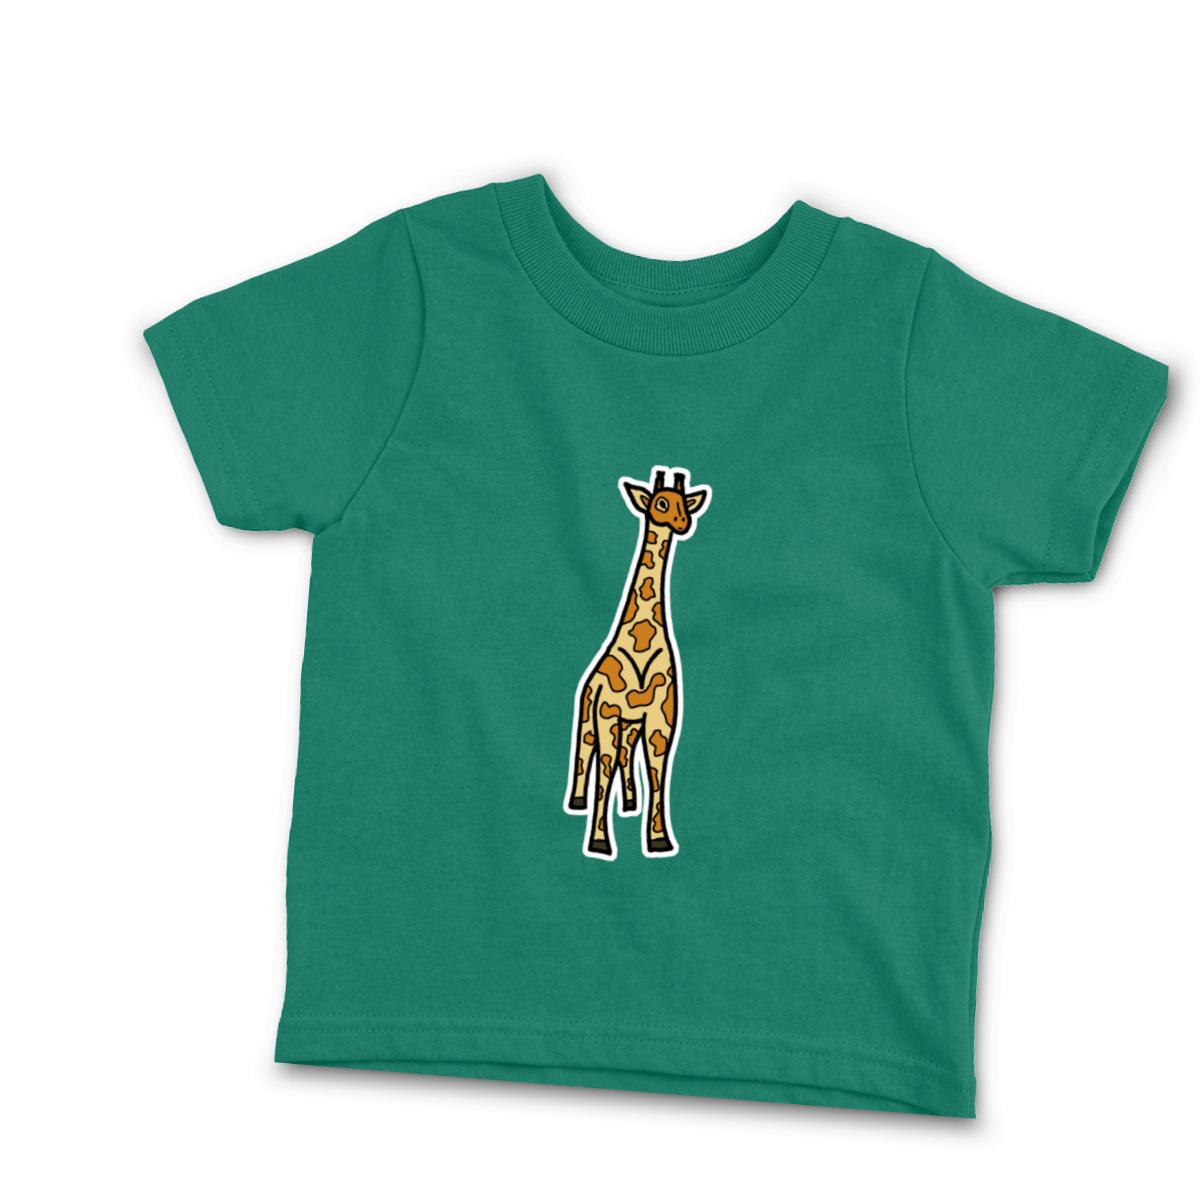 Toy Giraffe Toddler Tee 2T kelly